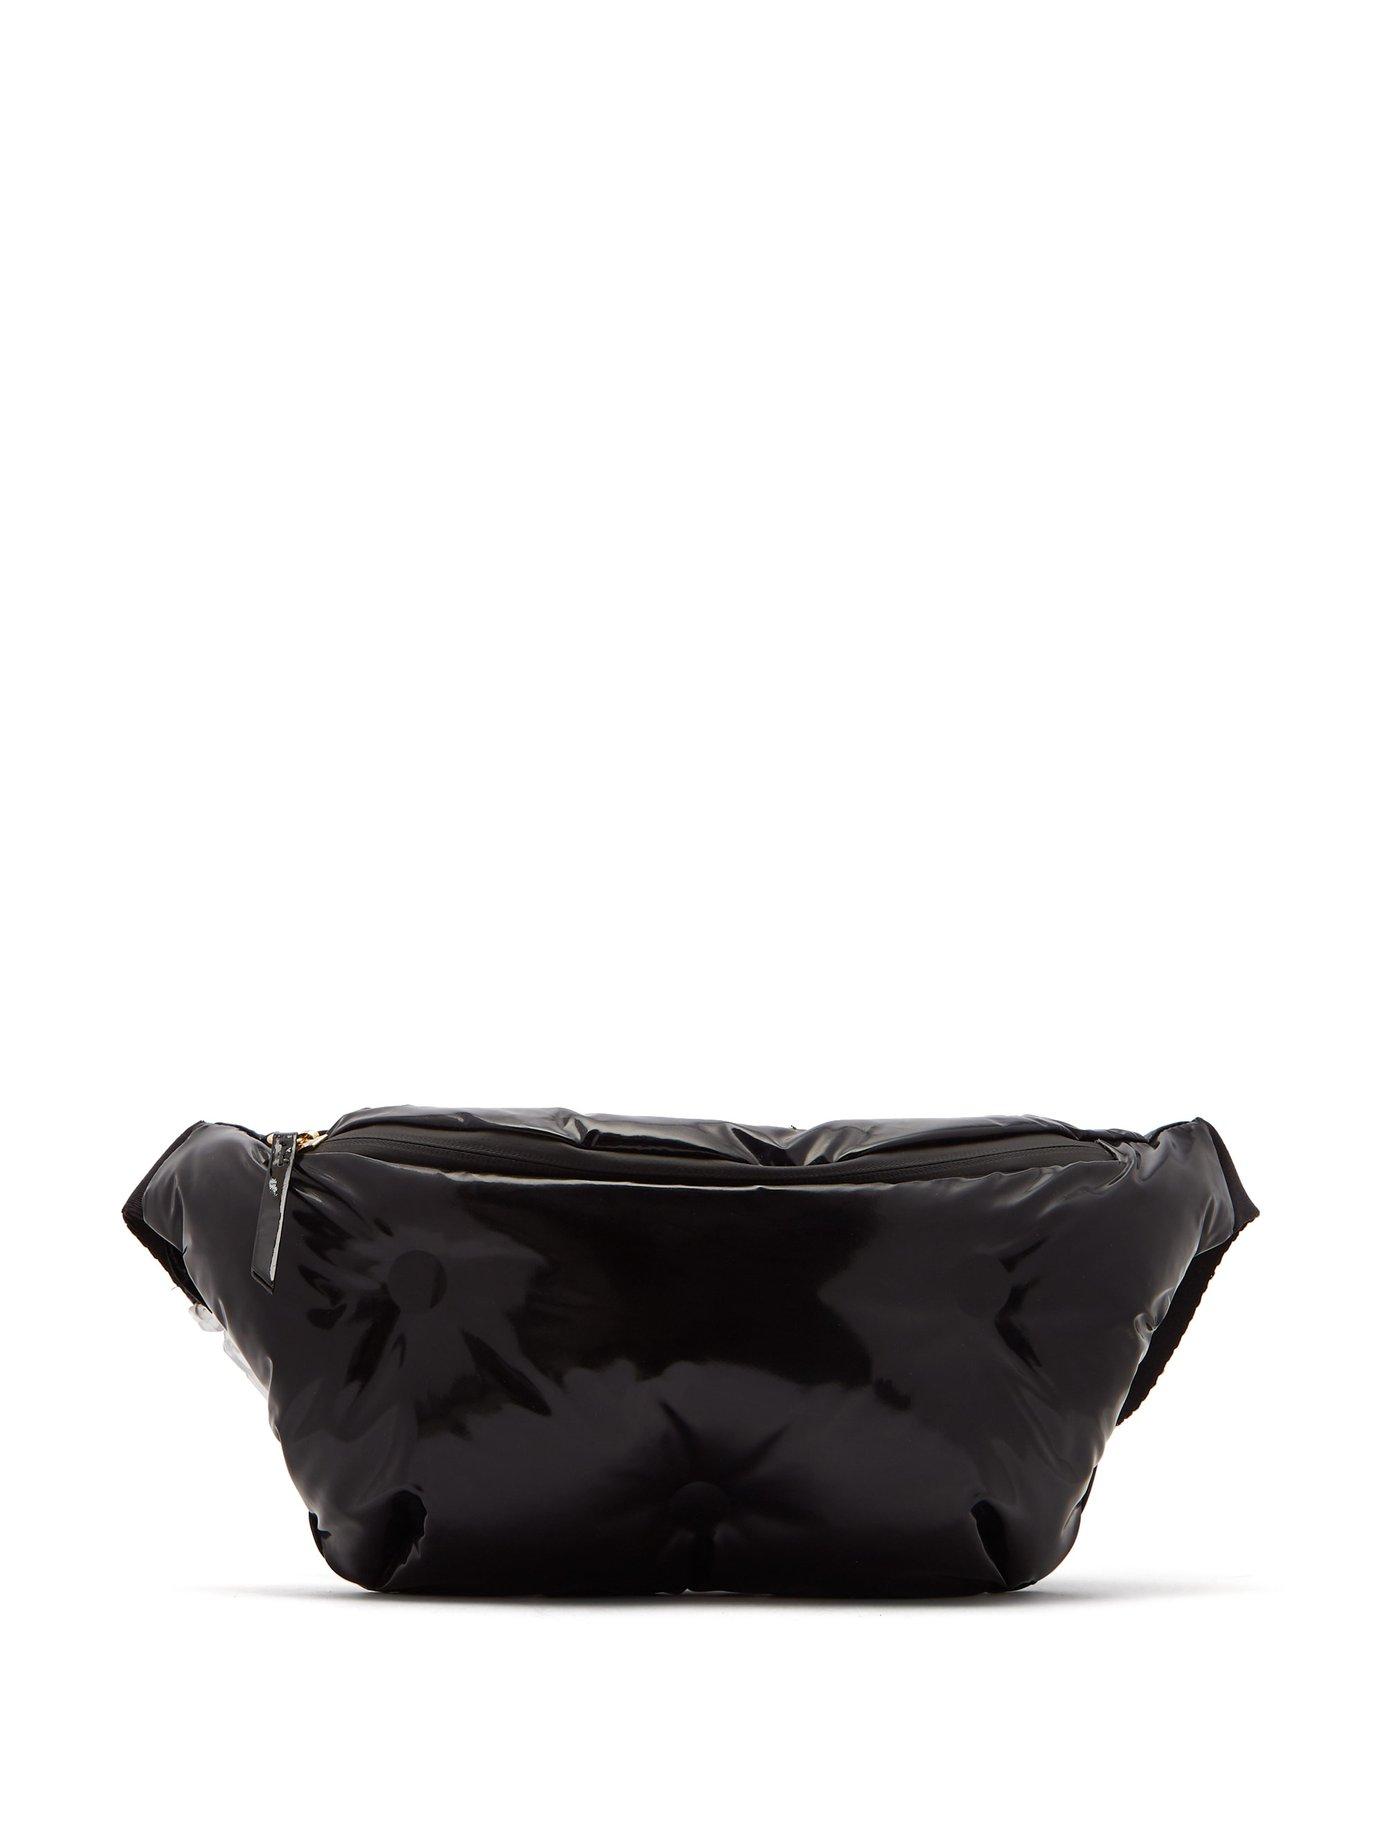 Maison Margiela Leather Glam Slam Quilted Belt Bag in Black - Lyst